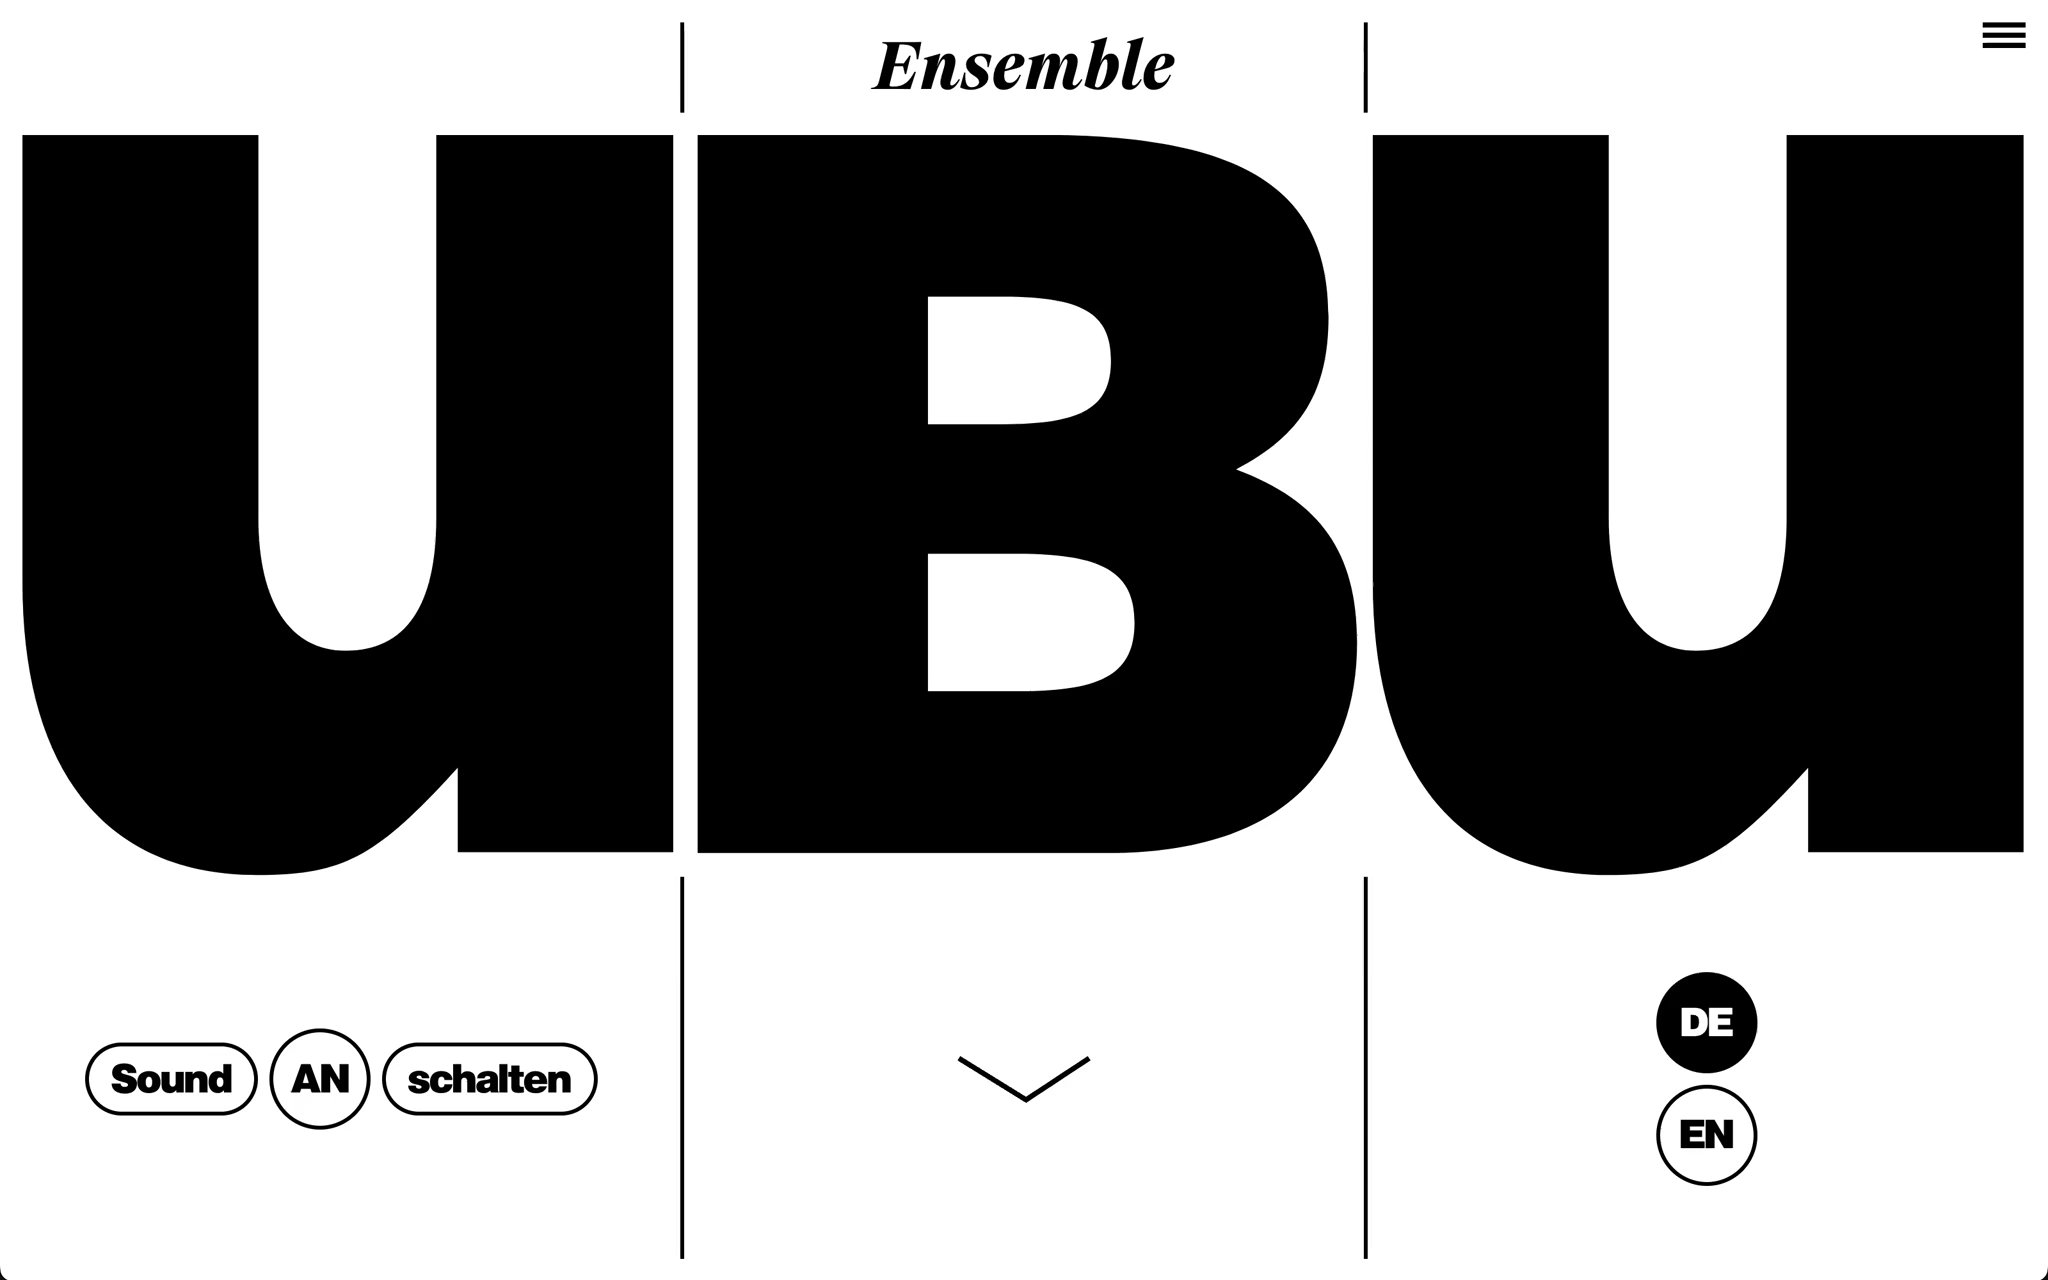 Screenshot of the Ensemble uBu homepage where Ensemble uBu is written in large letters